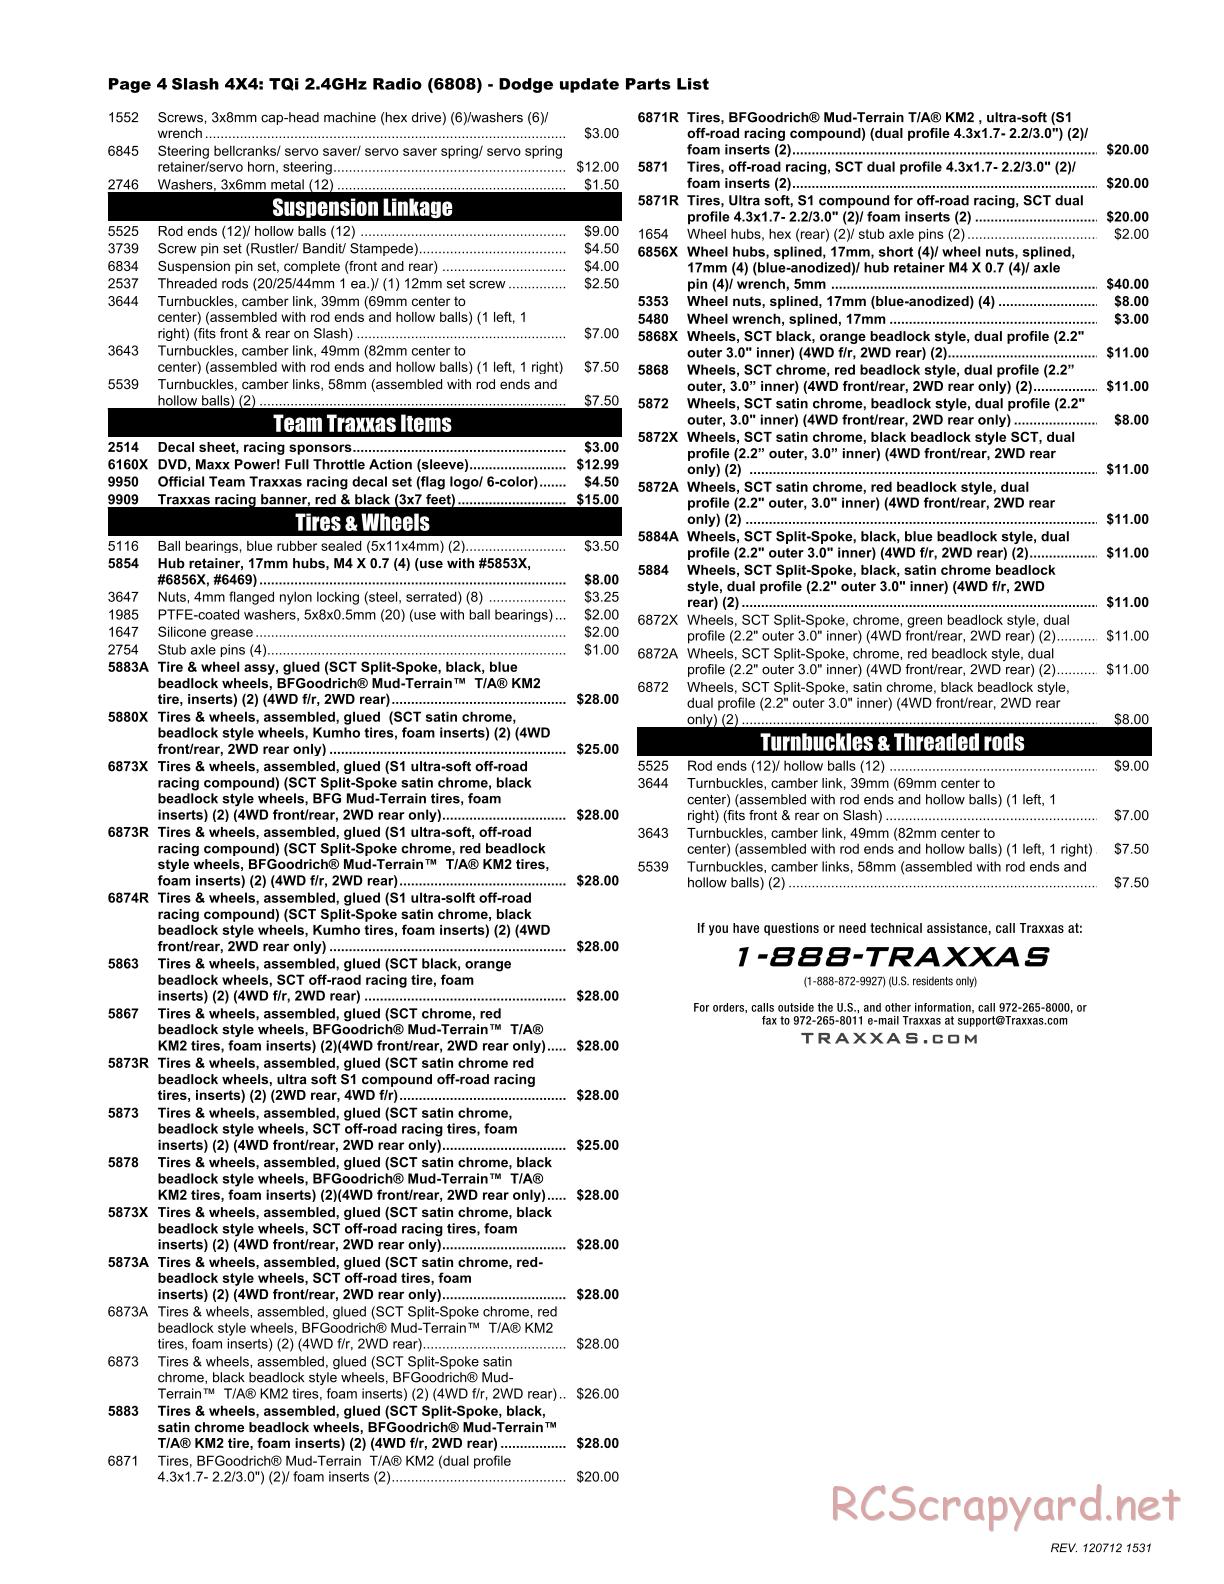 Traxxas - Slash 4x4 - Parts List - Page 4